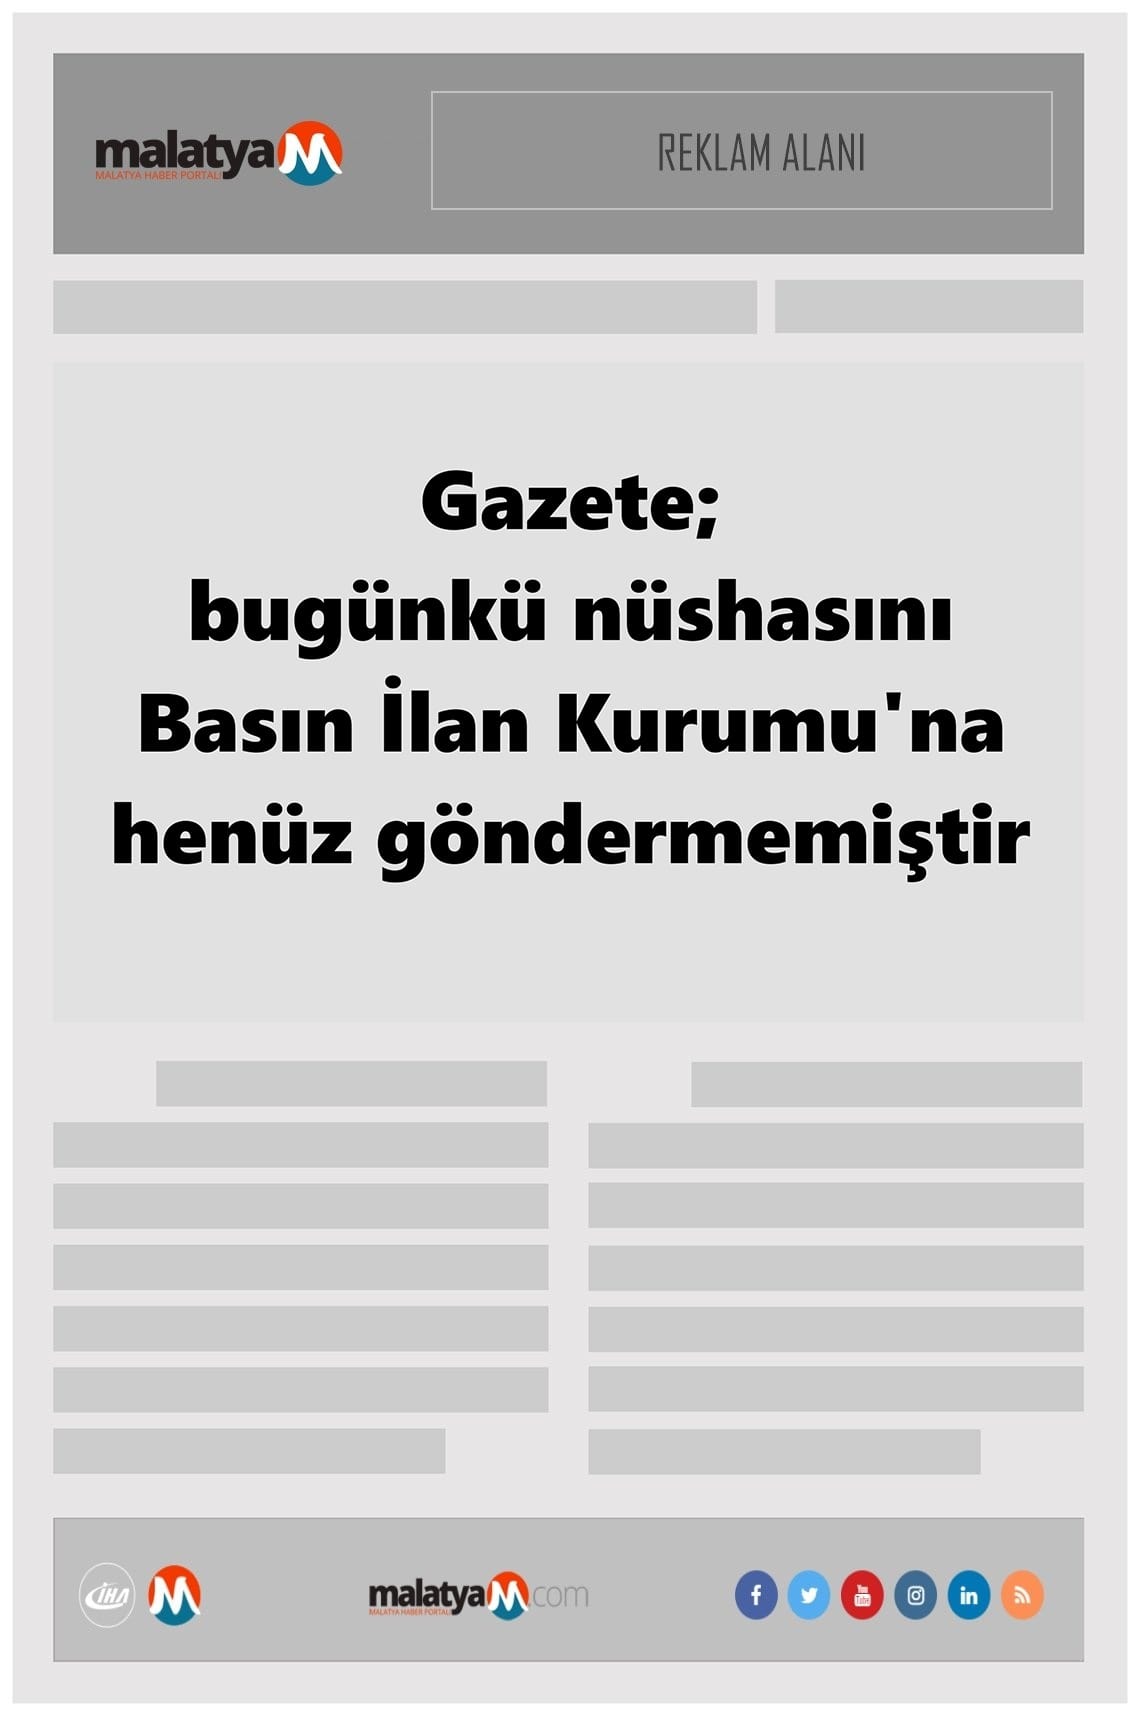 Malatya Söz gazetesi manşet ilk sayfa oku